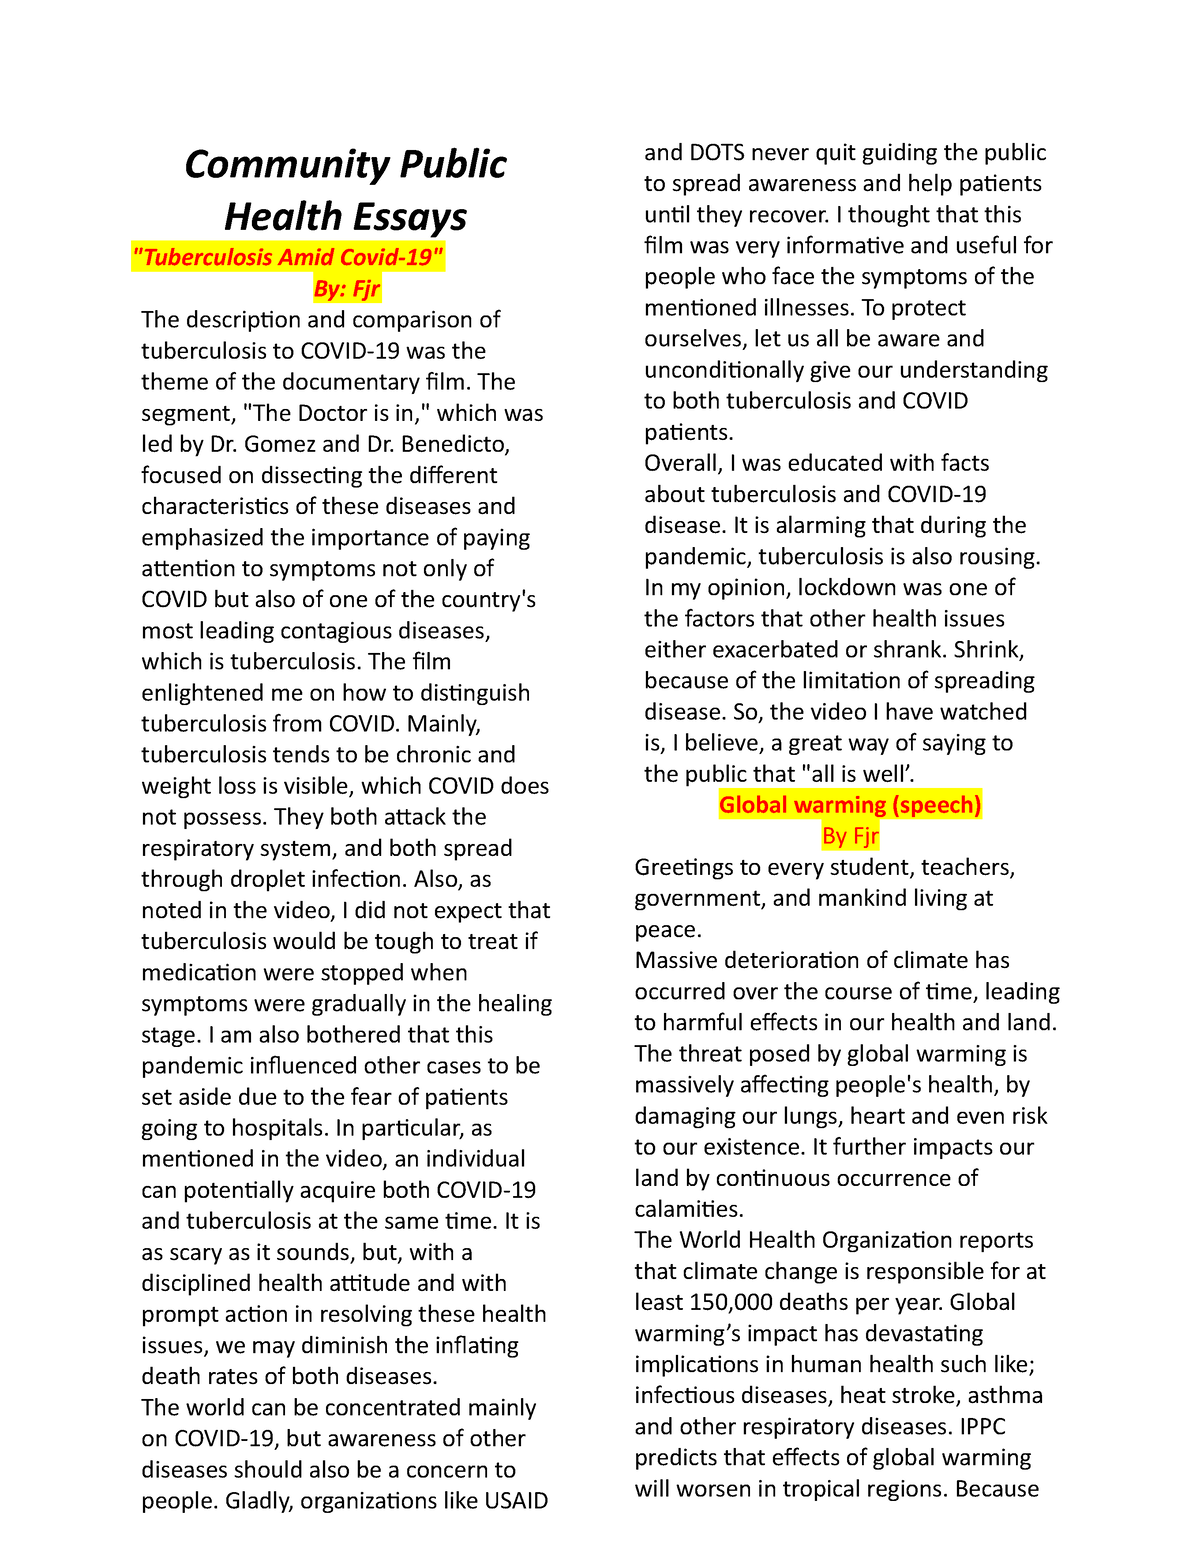 public health essays topics